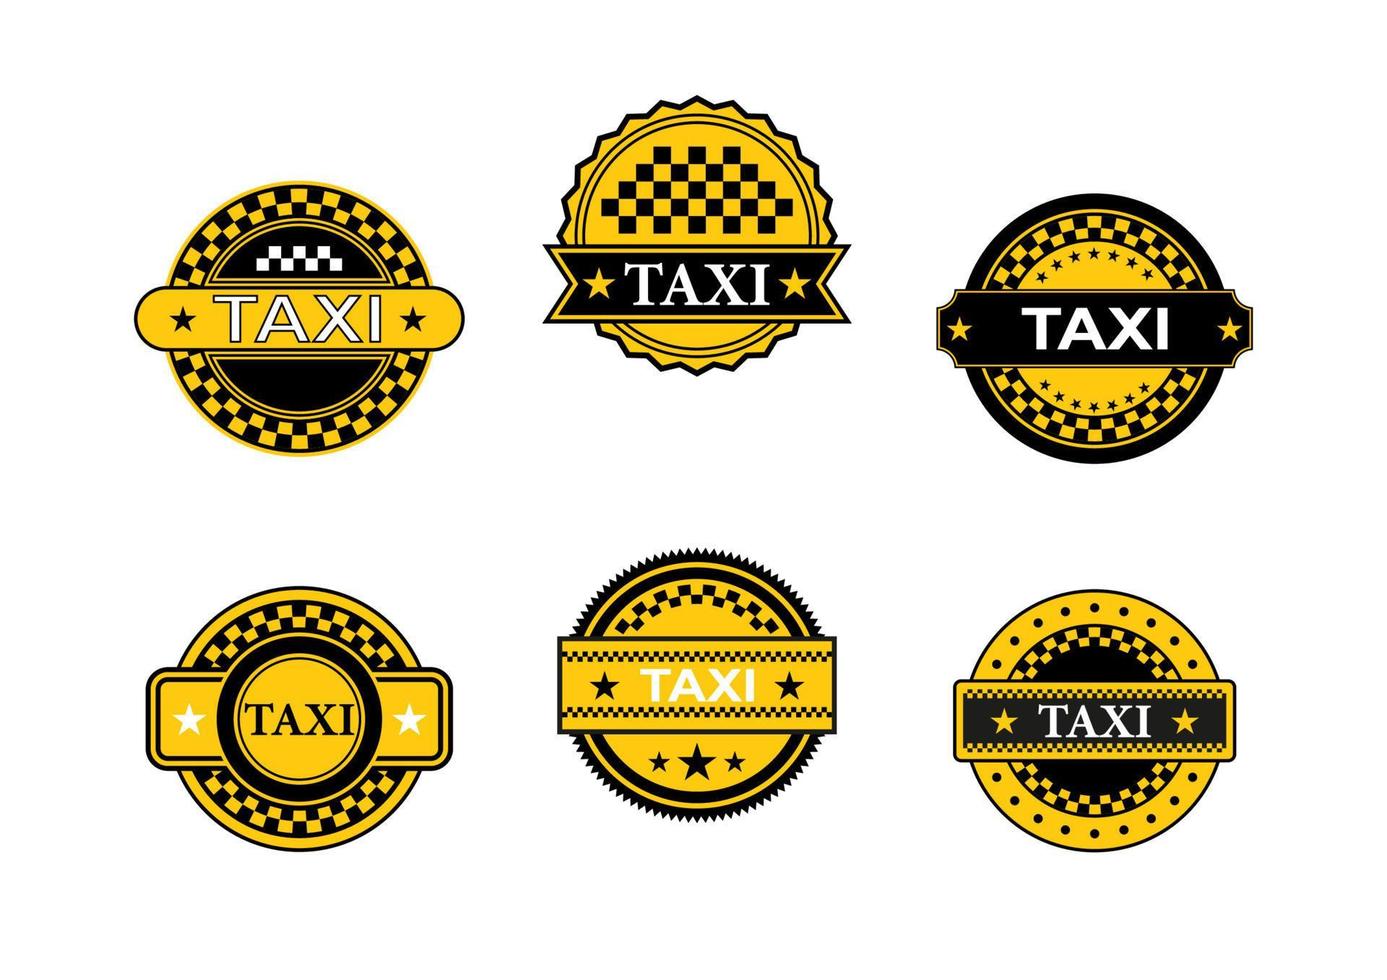 Taxi symbols and signs vector